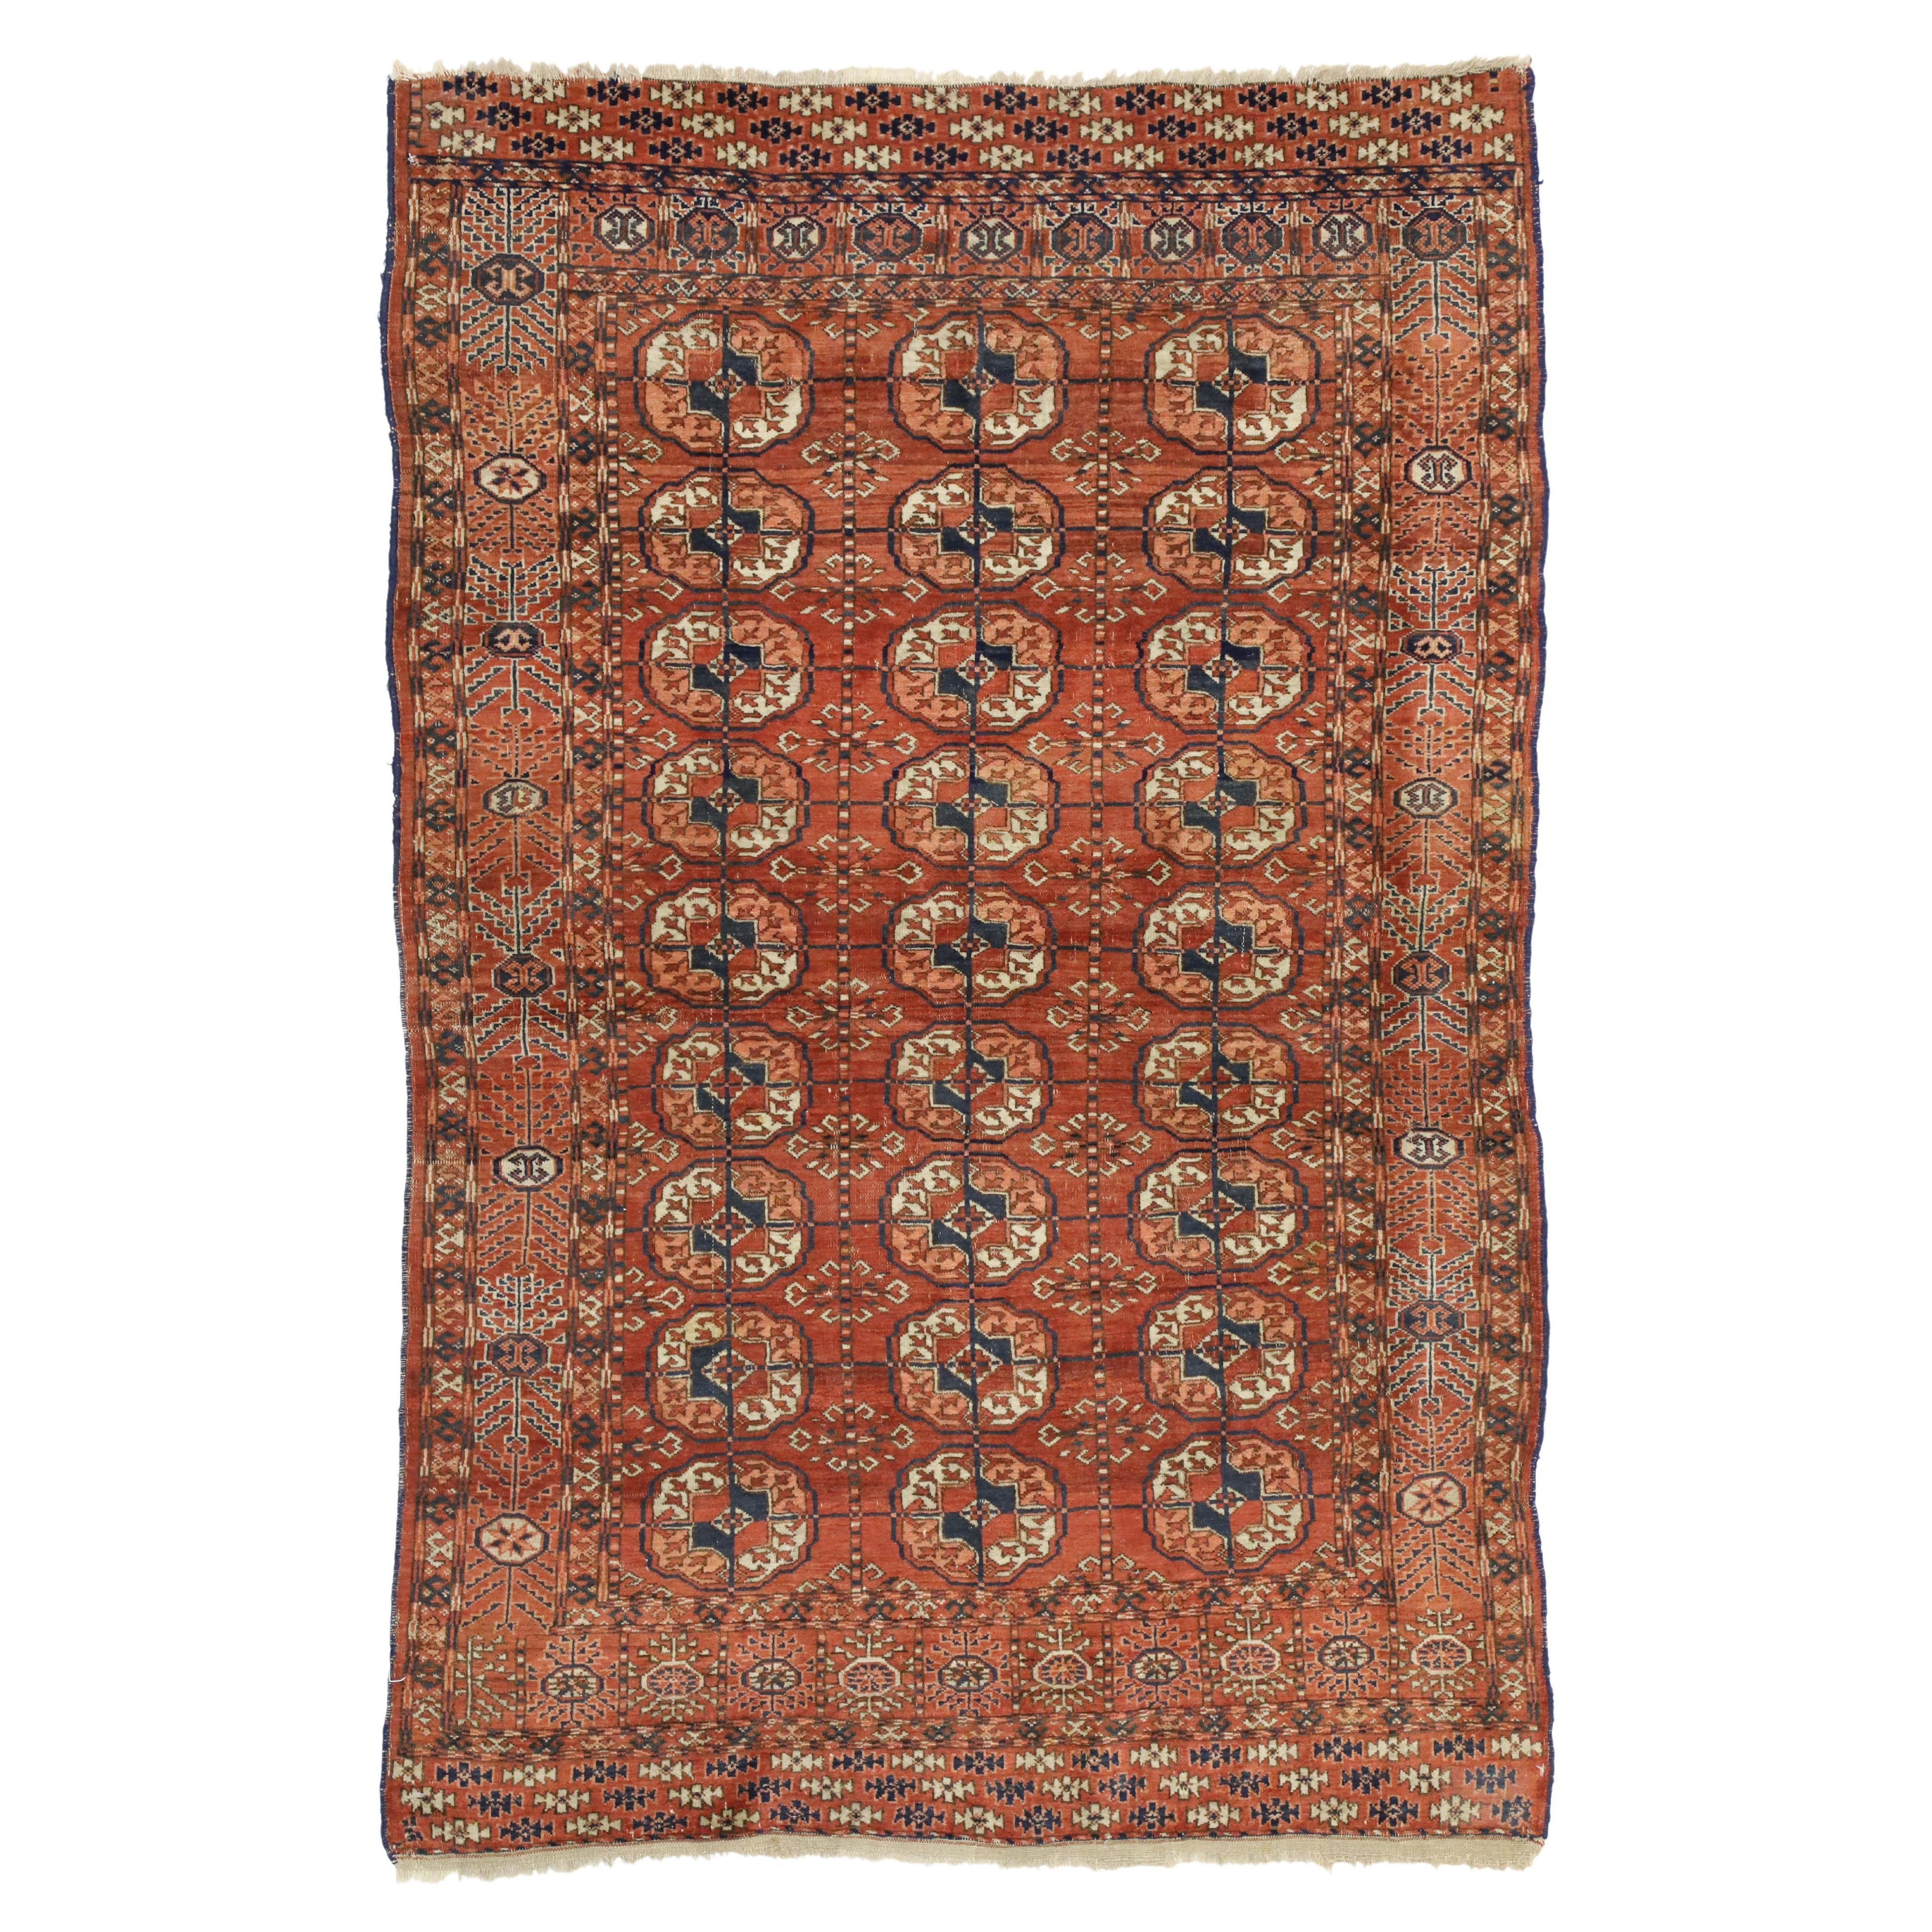 Tapis turkmène vintage de style tribal moderne, tapis Tekke Accent, tapis Turkoman